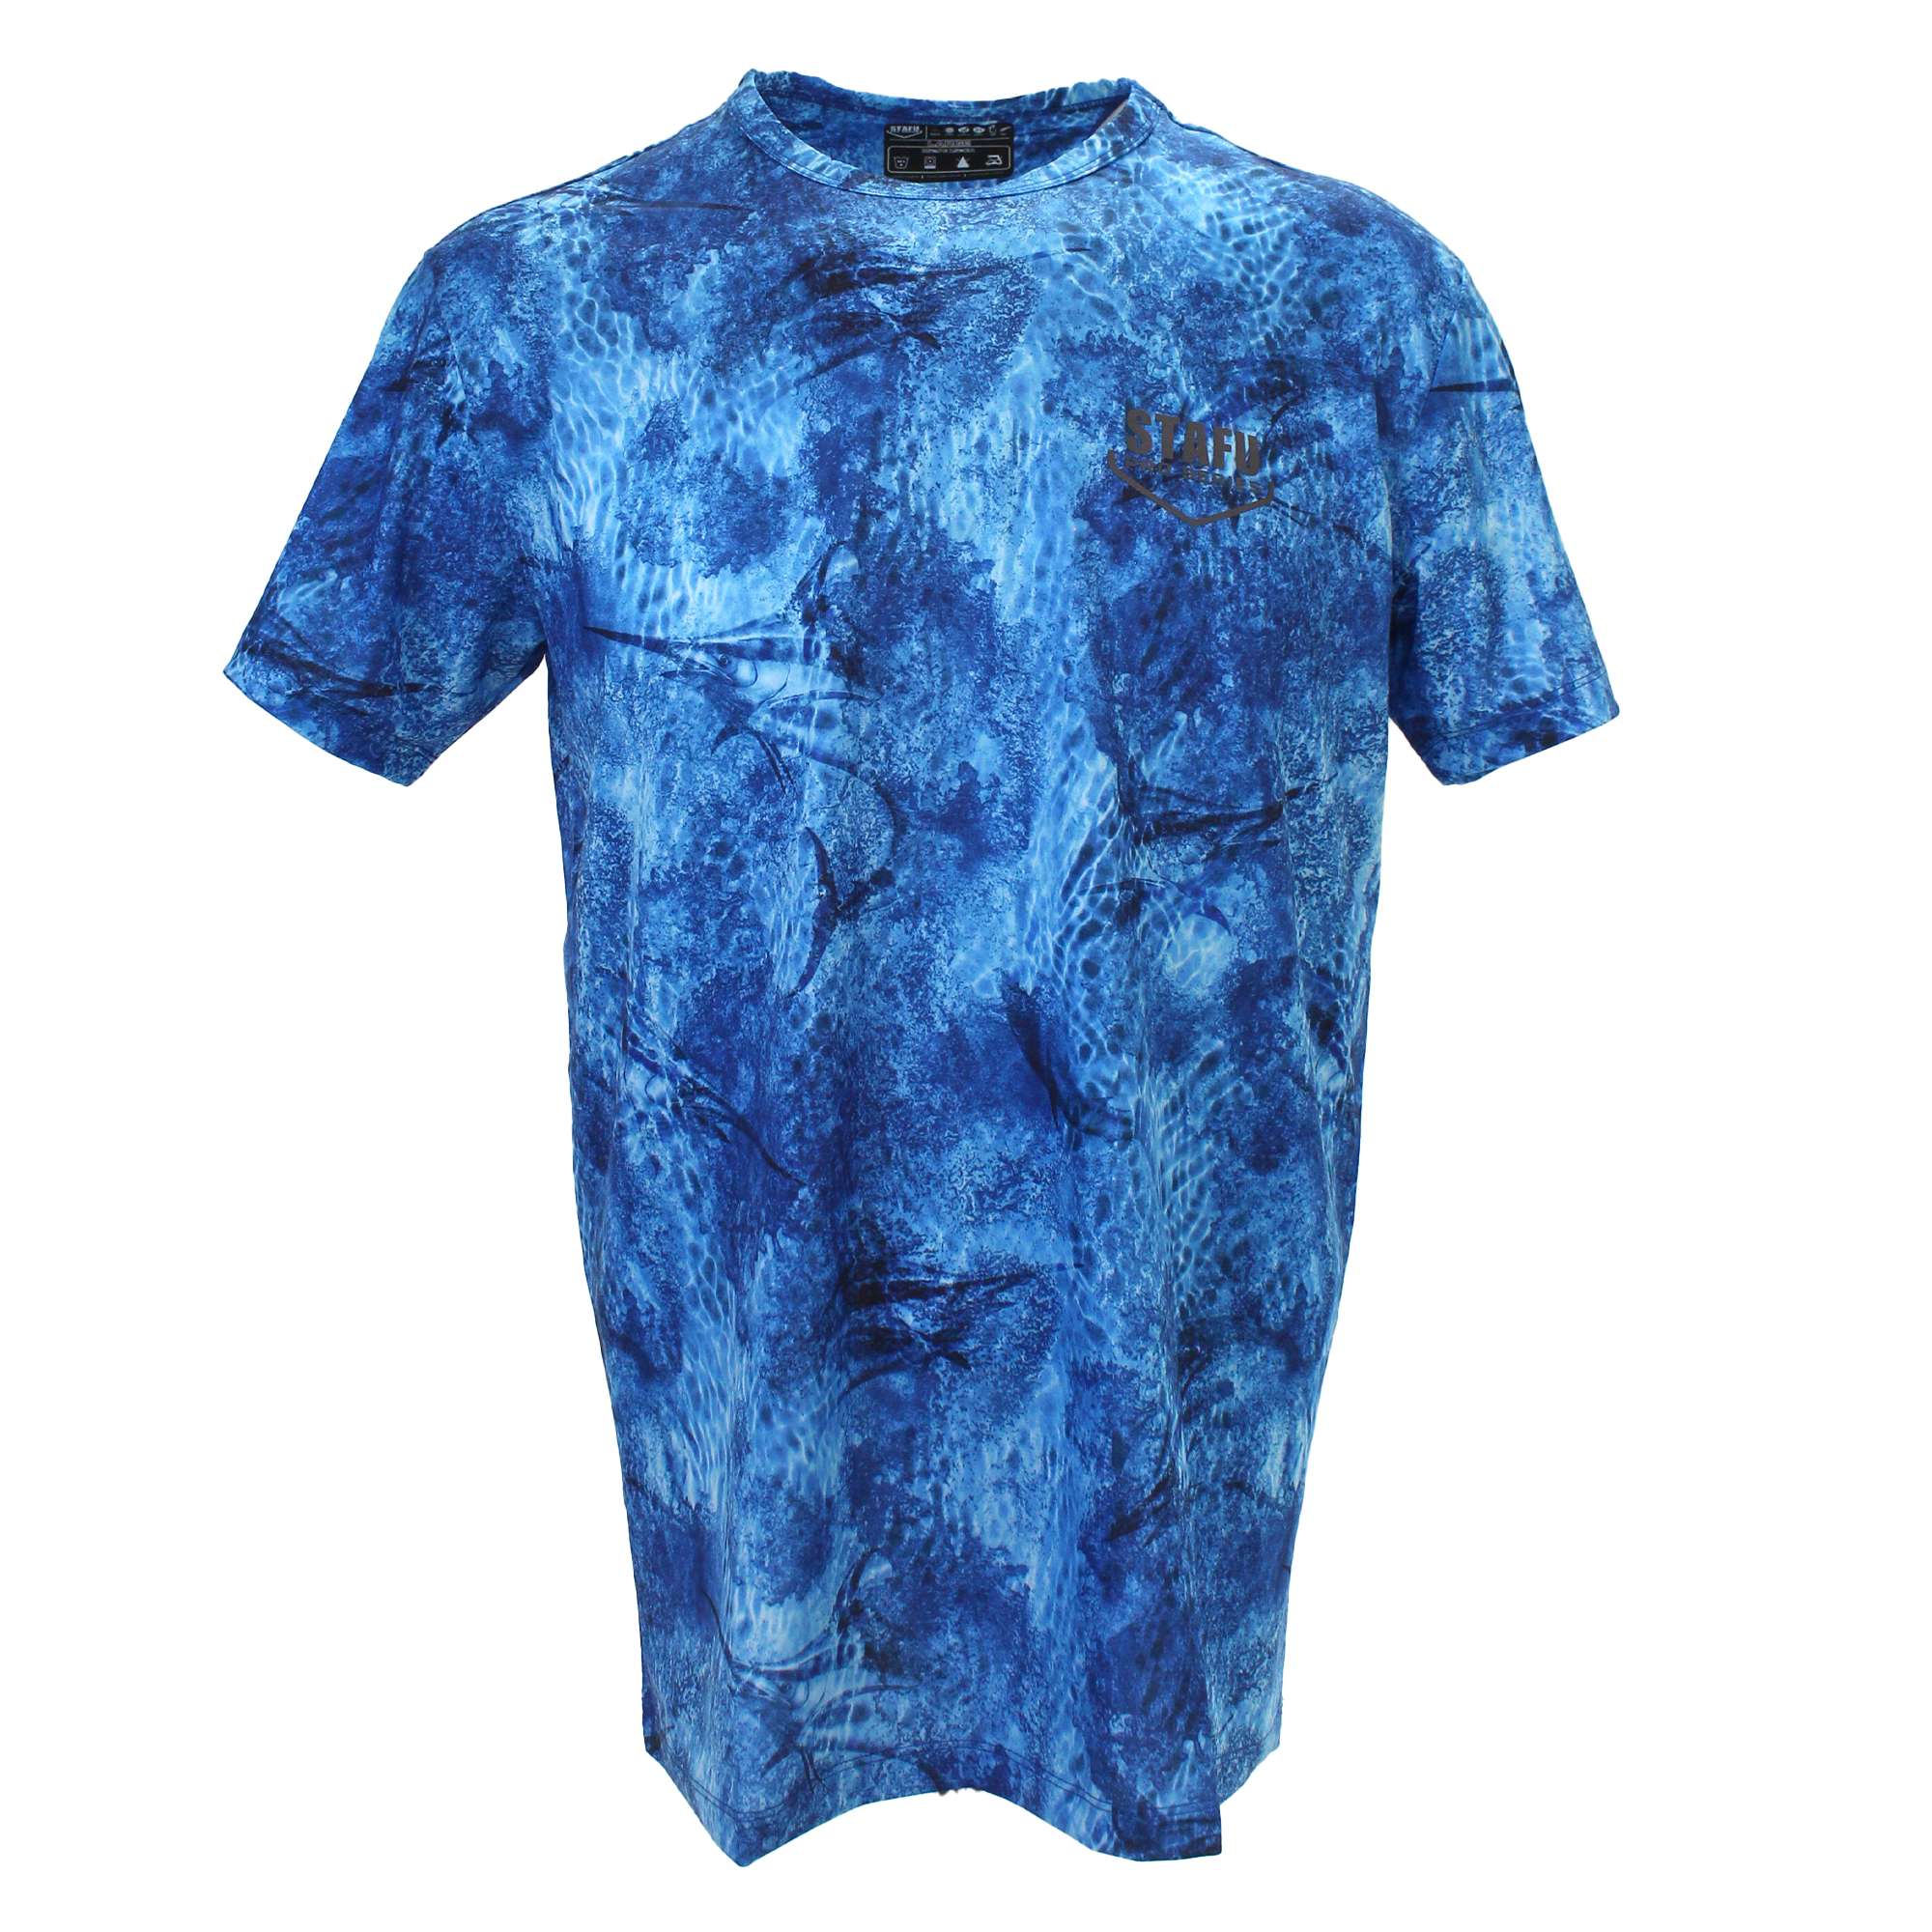 .99 Short Sleeve Ultra Light Performance T-Shirt - Marlin Mania - Blue